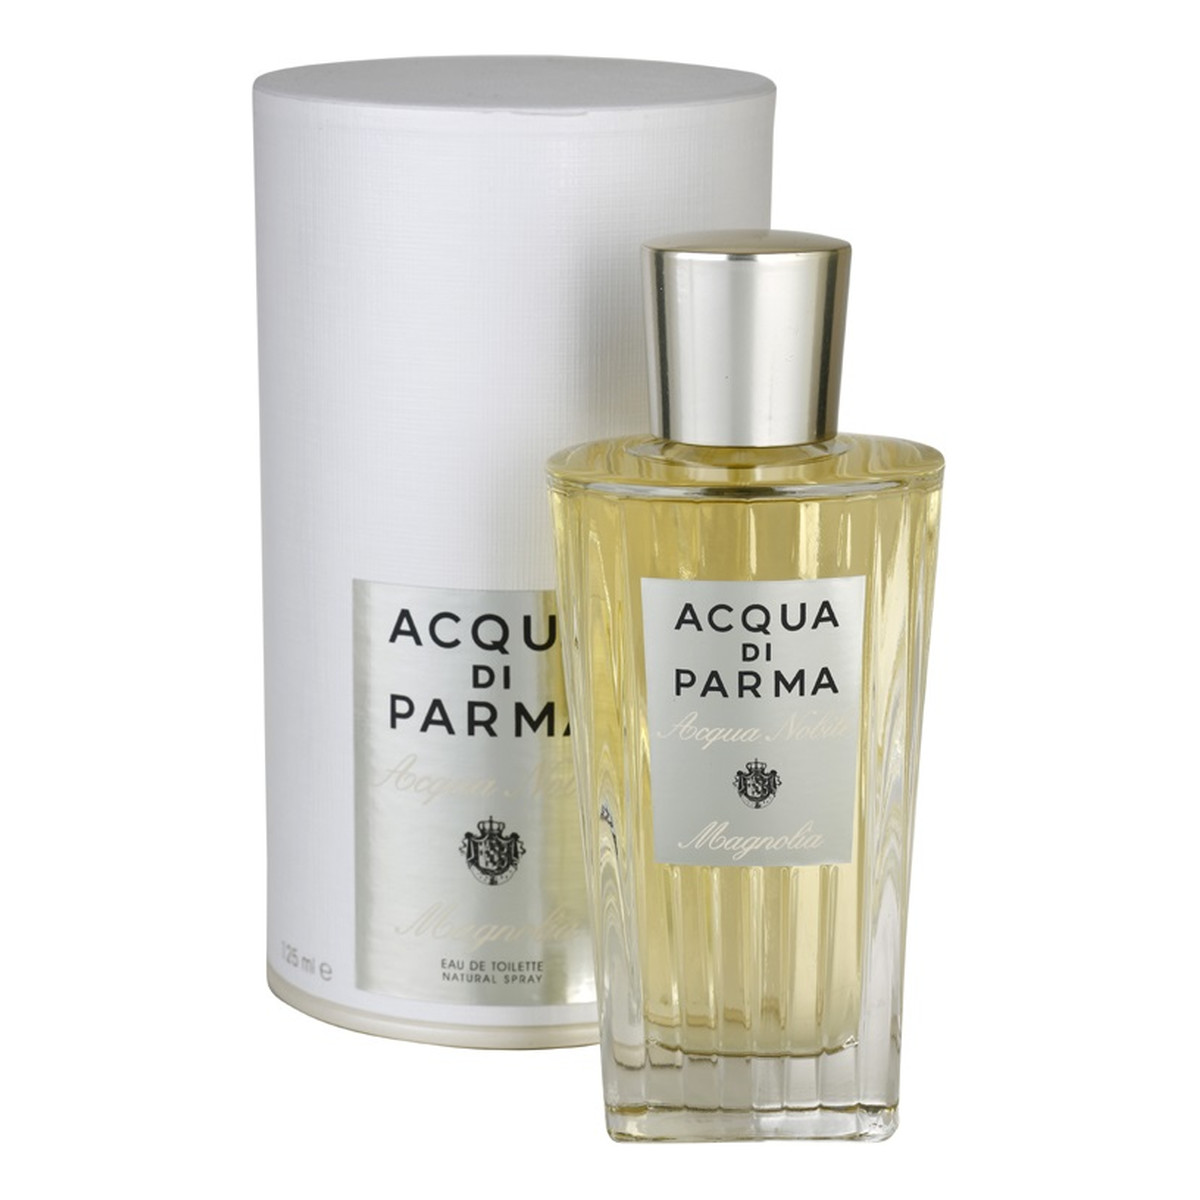 Acqua Di Parma Acqua Nobile Magnolia woda toaletowa dla kobiet 125ml